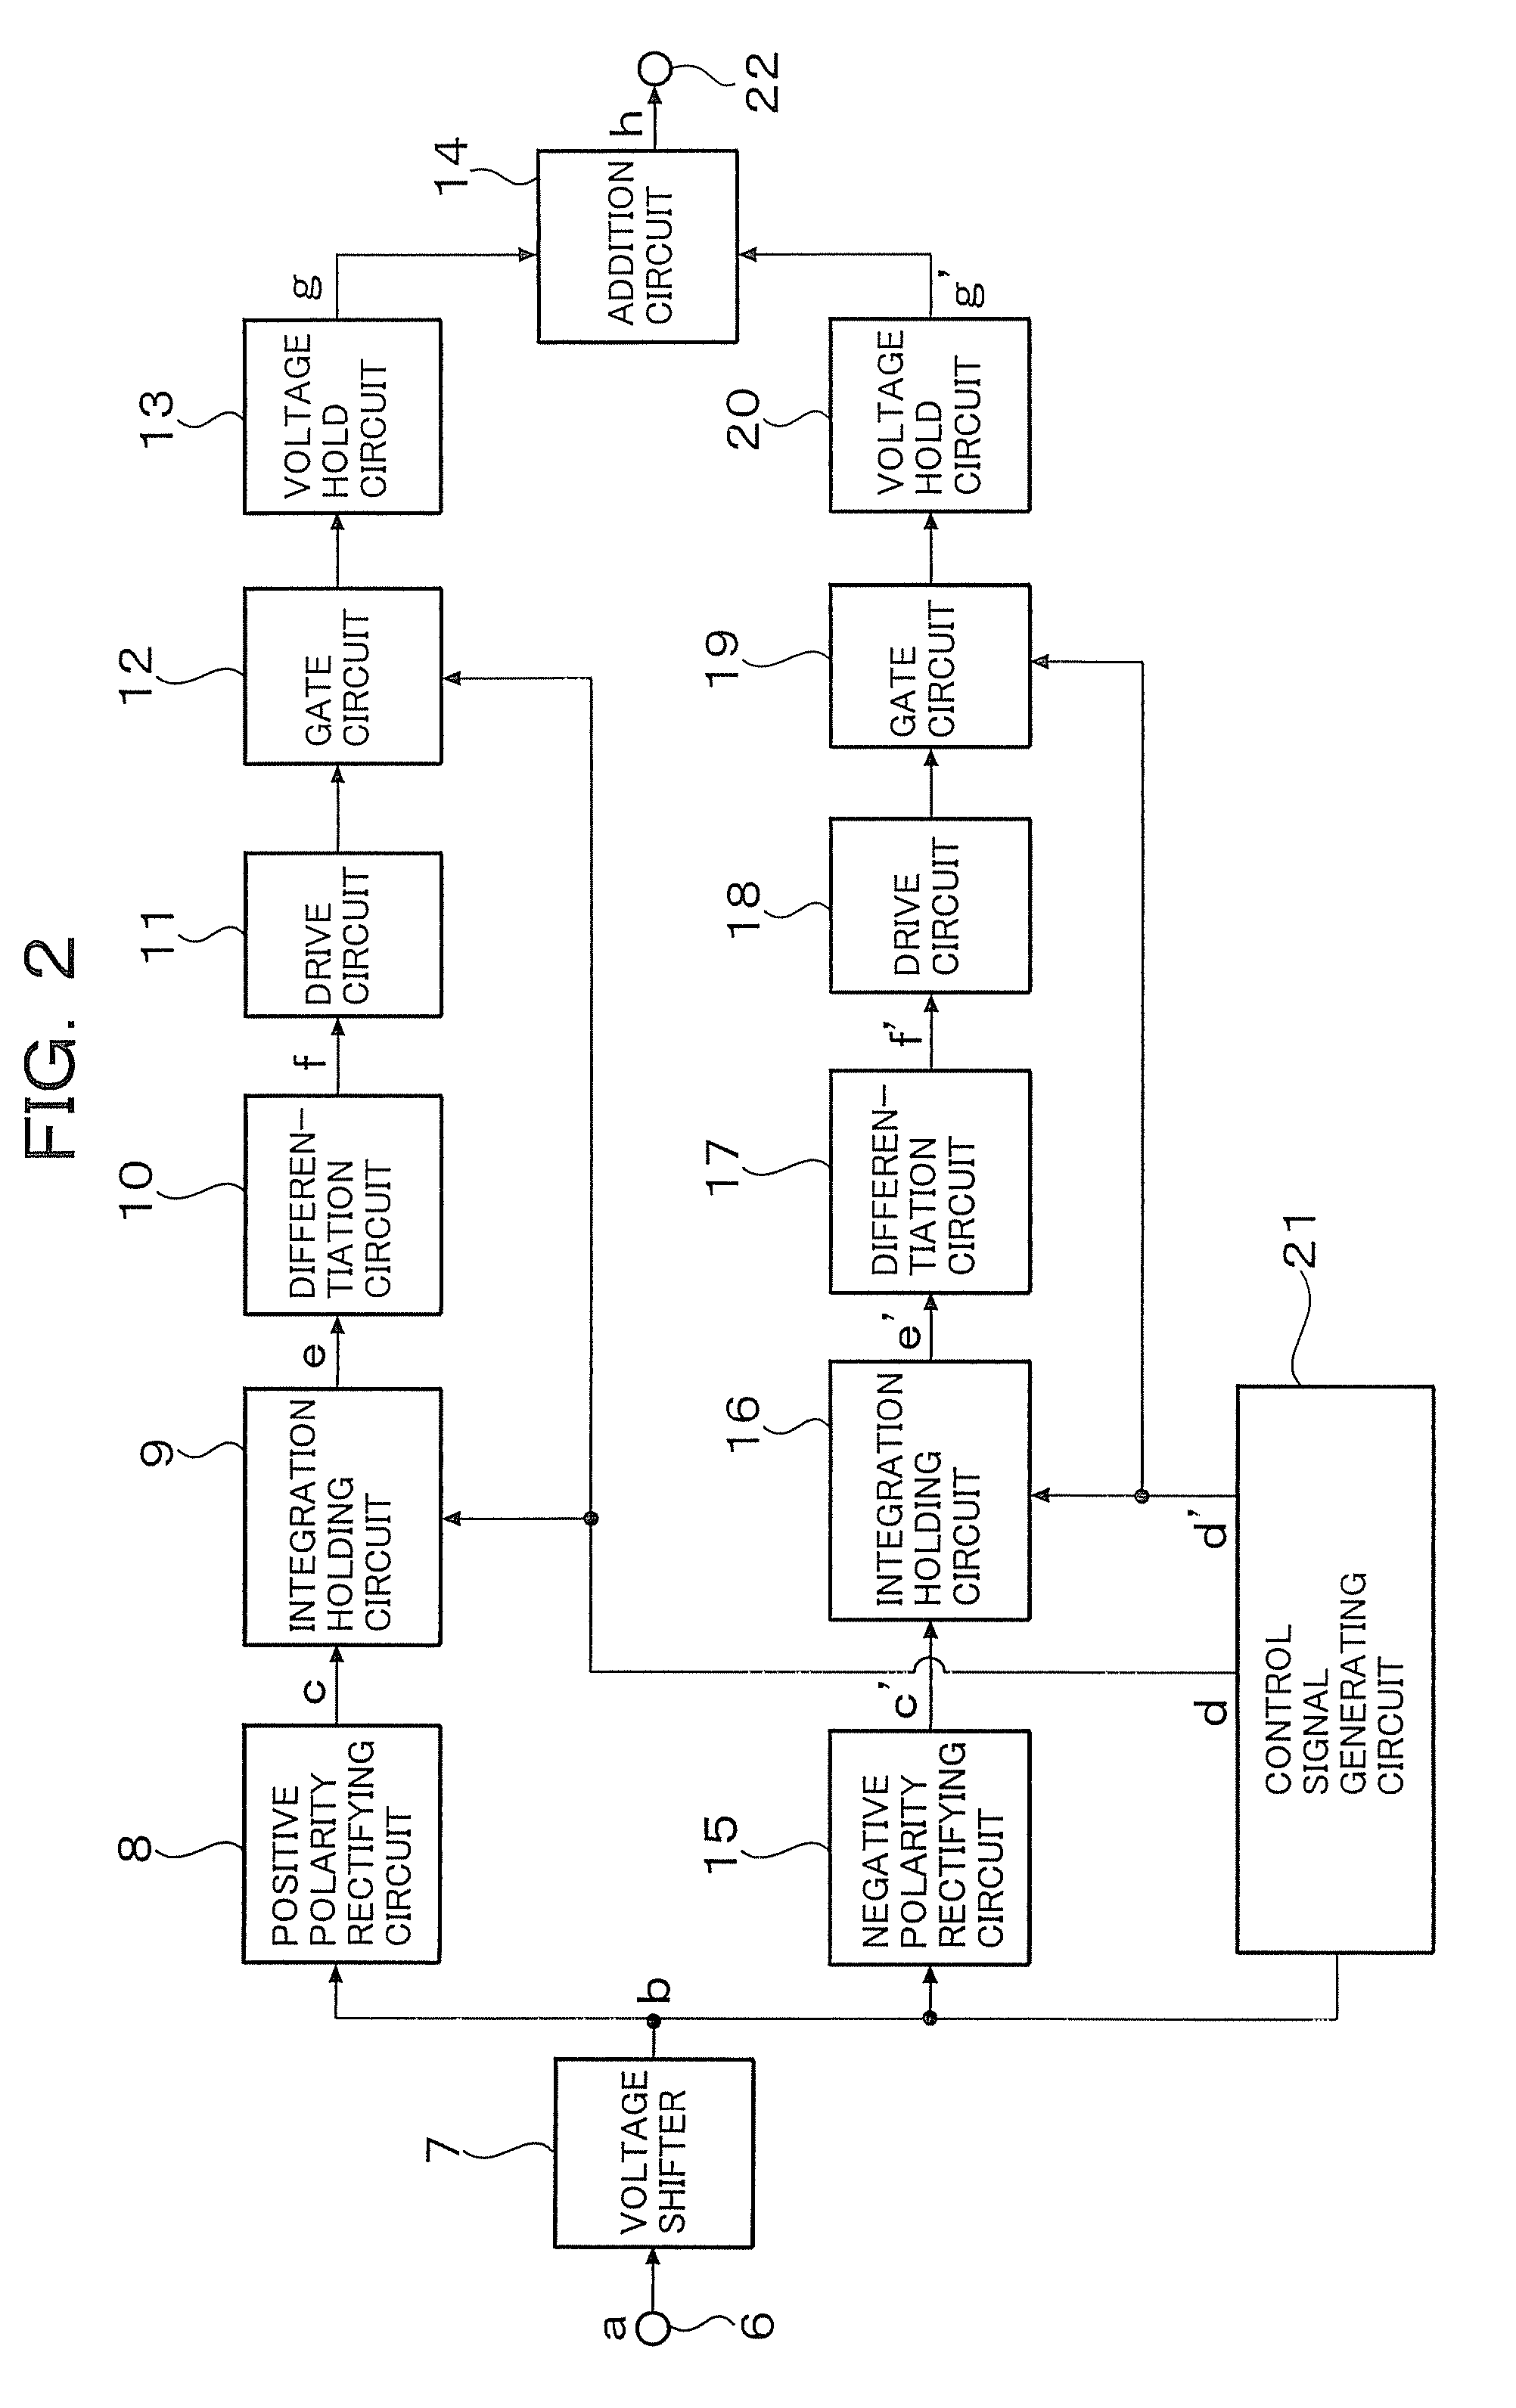 Phase comparison signal processing circuit